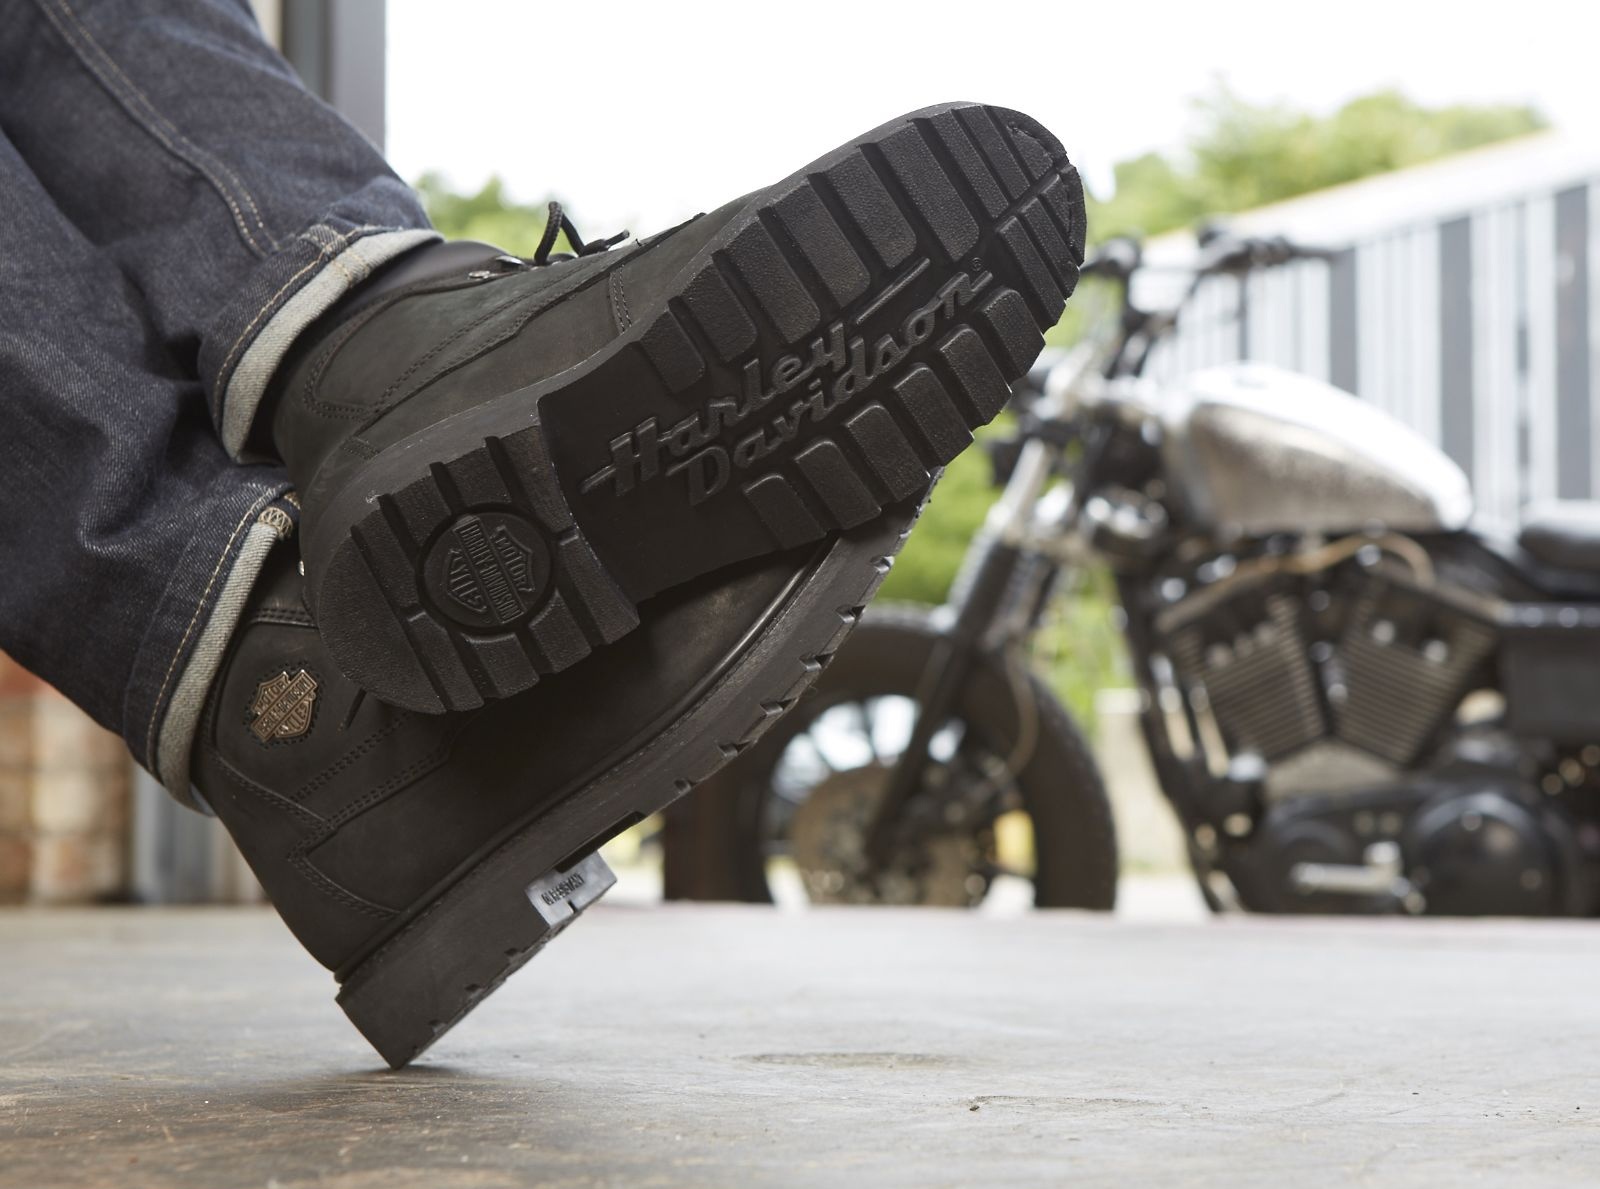 Harley Davidson Badlands Boots At Thunderbike Shop